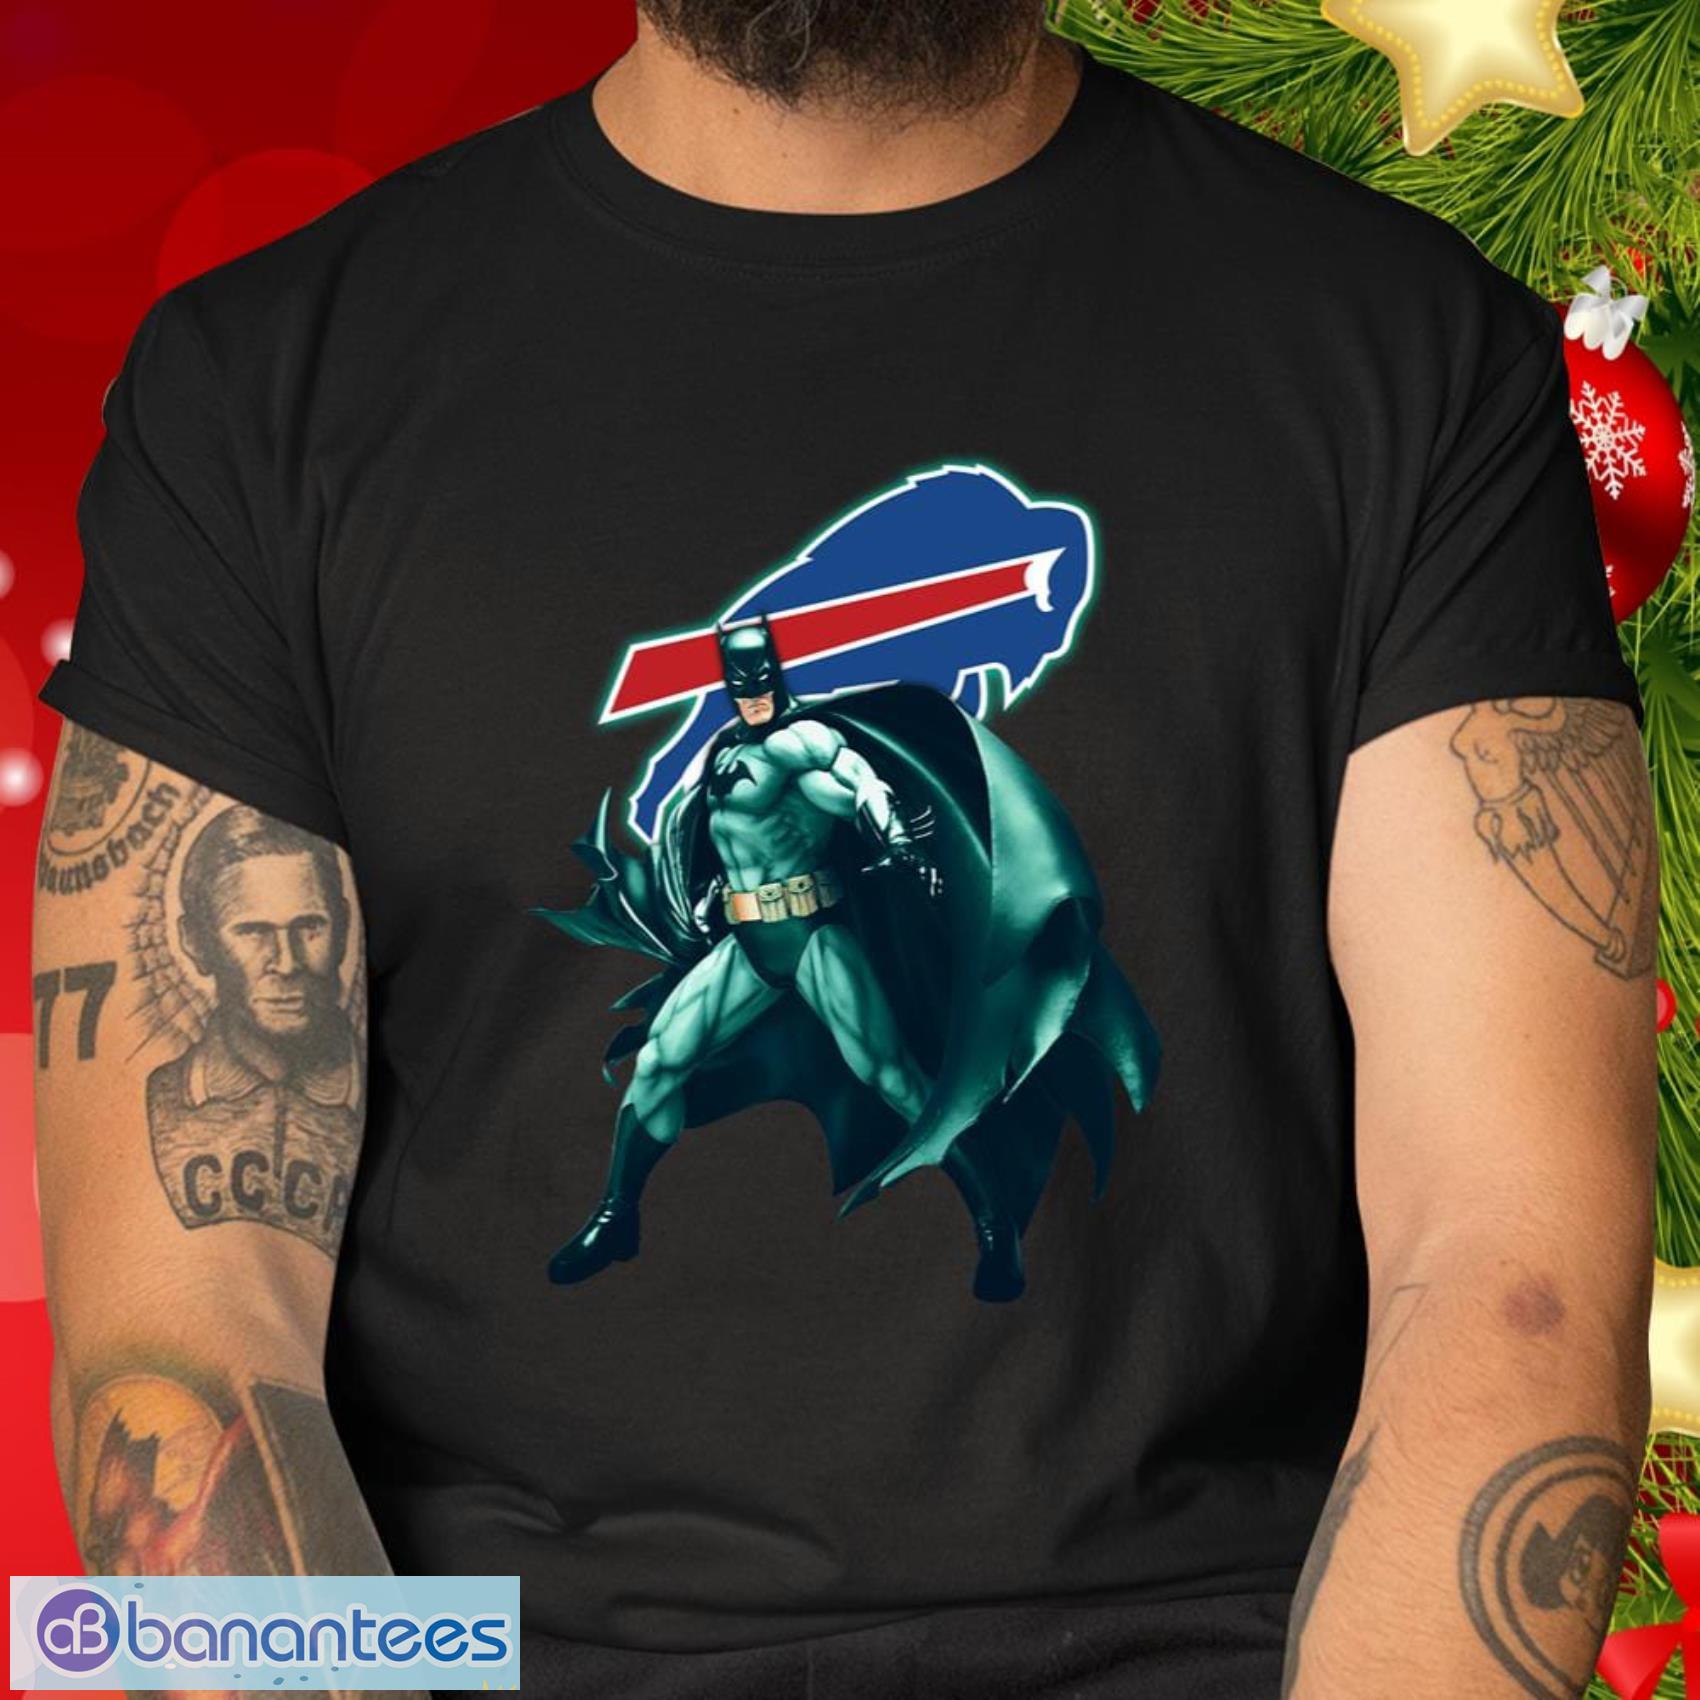 Buffalo-Bills Batman Dc T Shirt Gift For Sport Teams Fans - Buffalo-Bills Batman Dc T Shirt_2